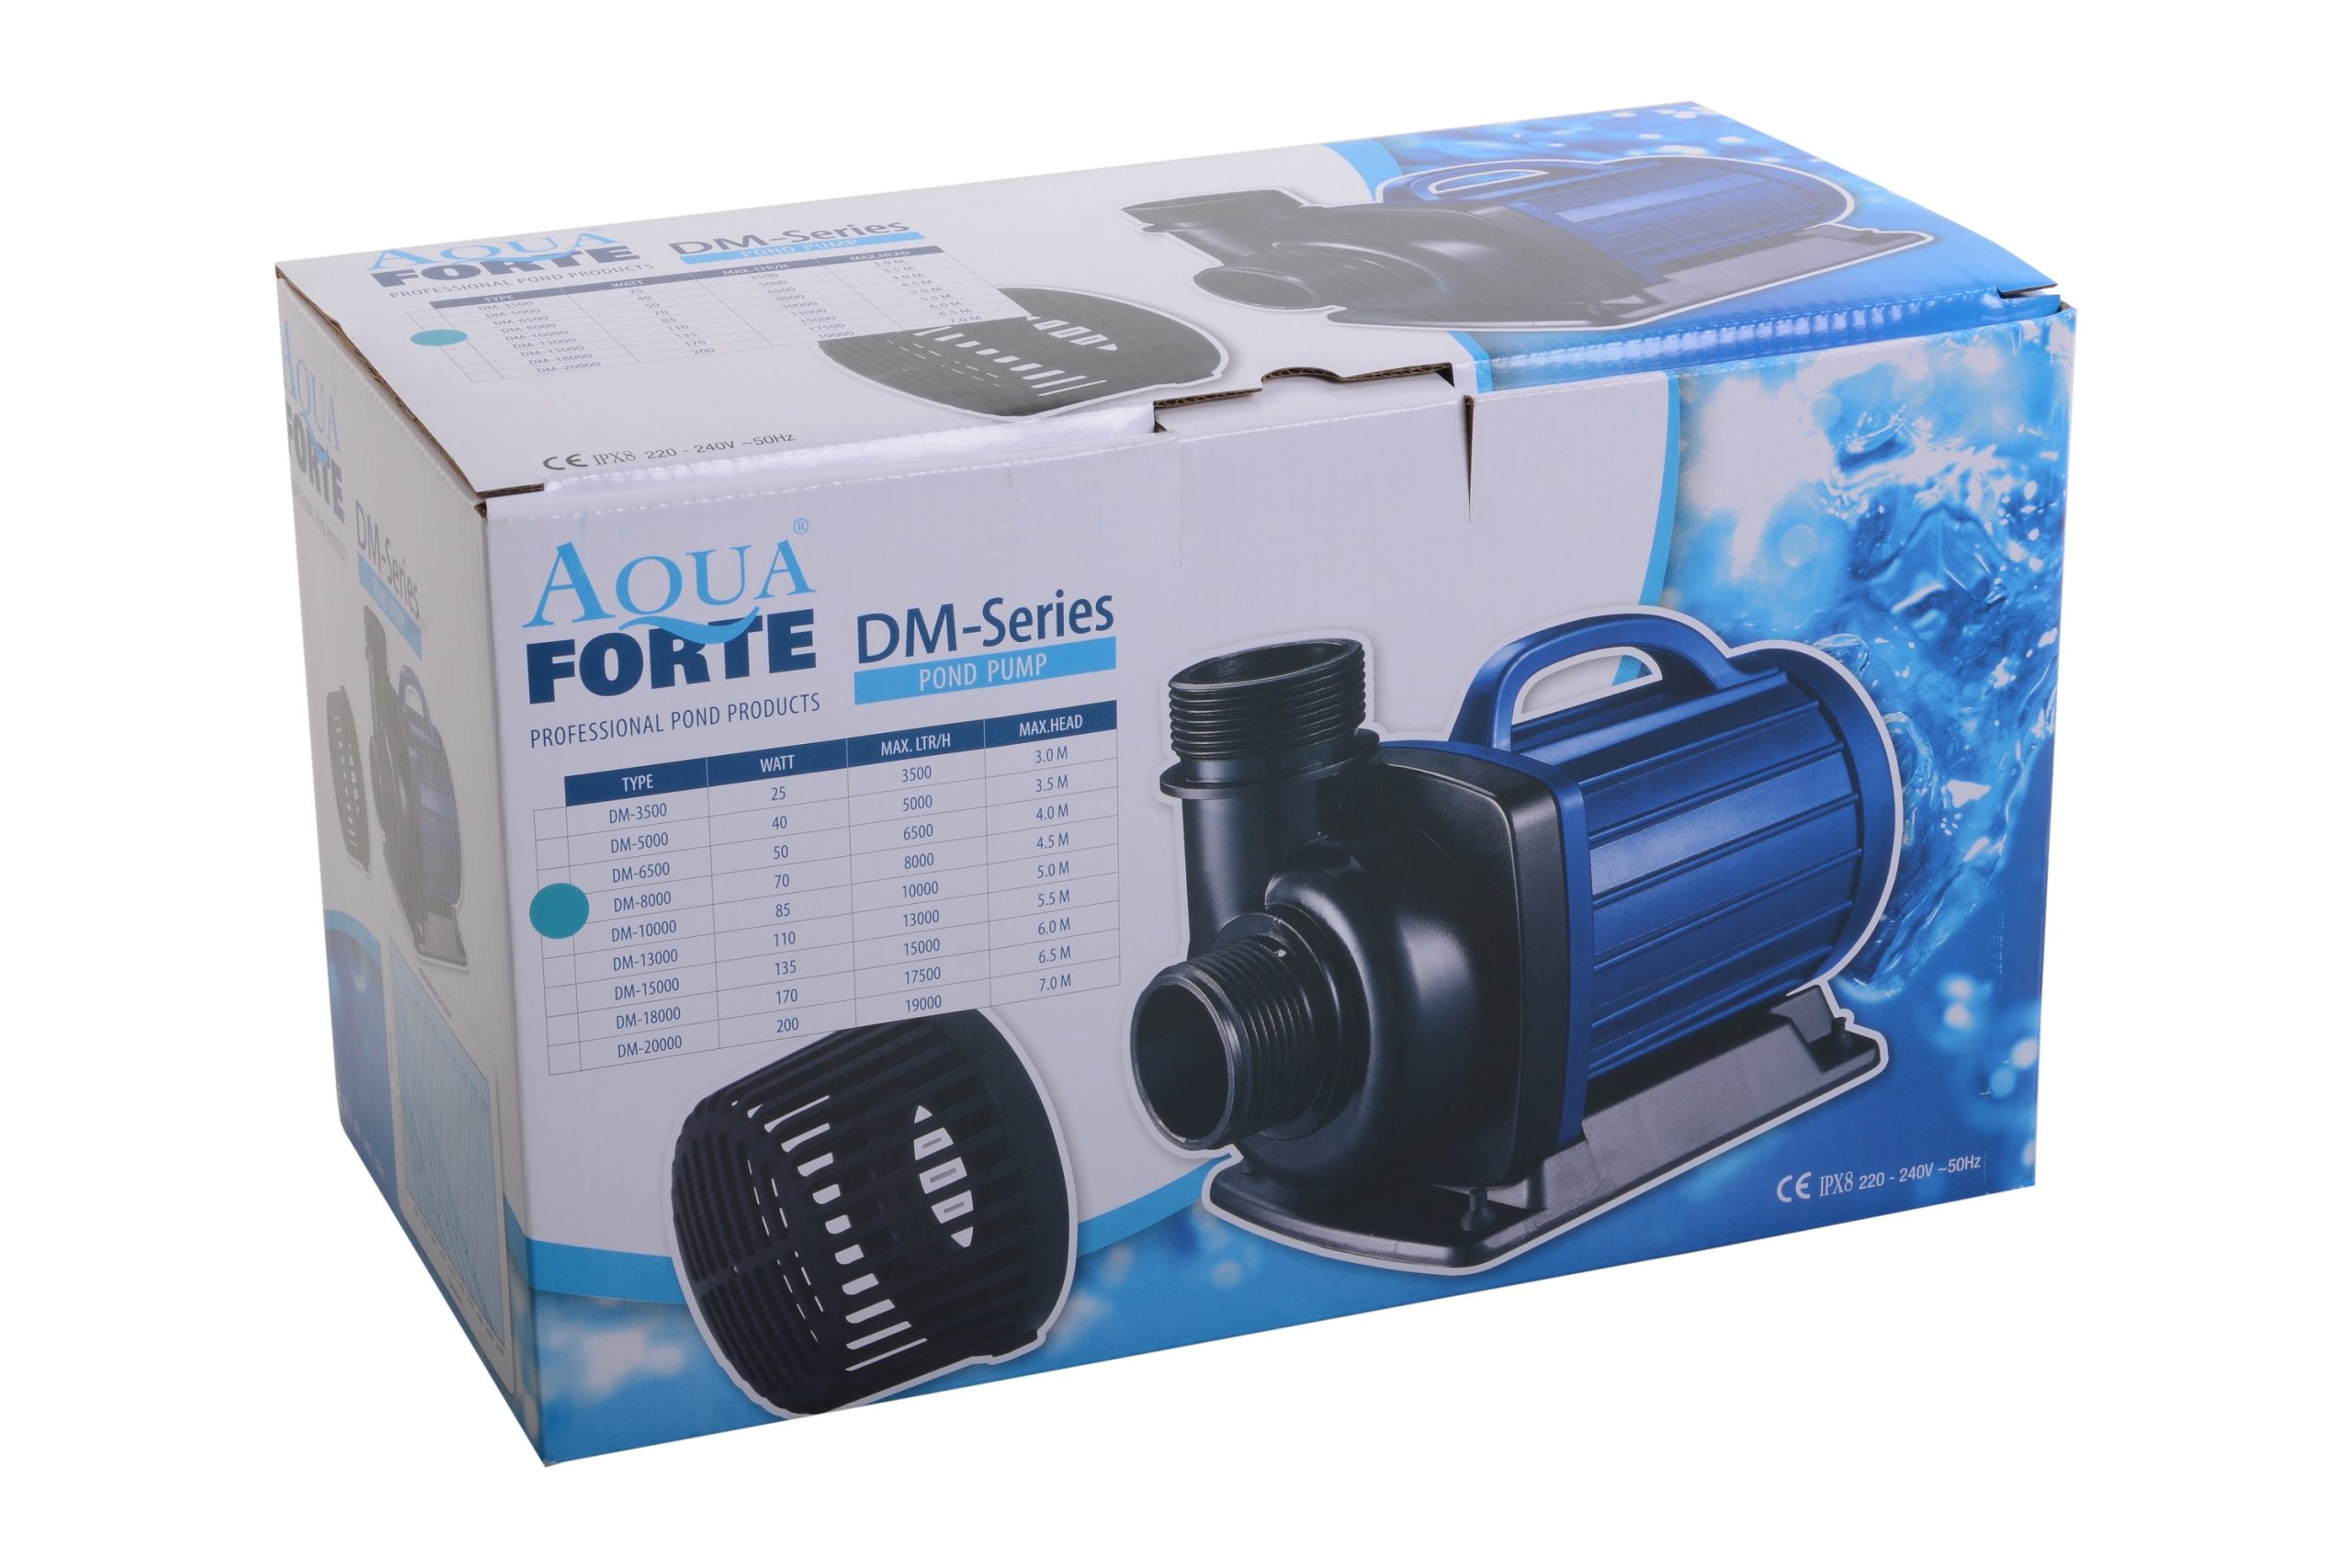 AquaForte DM-8000 - AquaForte and Innovative (Swimming) Pond Products